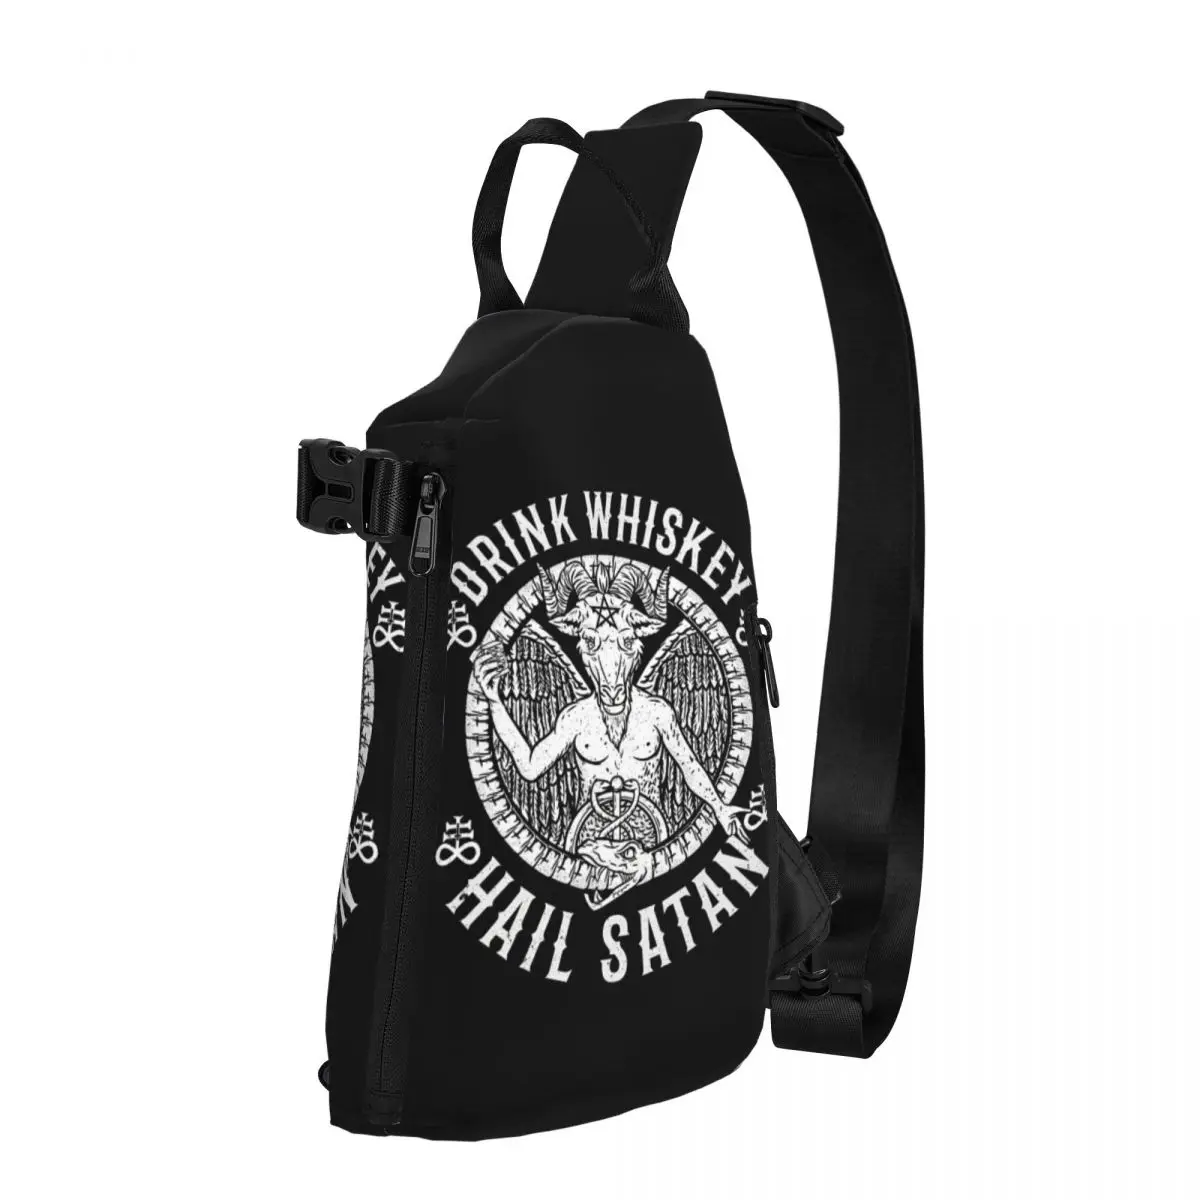 Drink Whiskey Hail Satan Shoulder Bags Chest Cross Chest Bag Diagonally Casual Man Messenger Bag